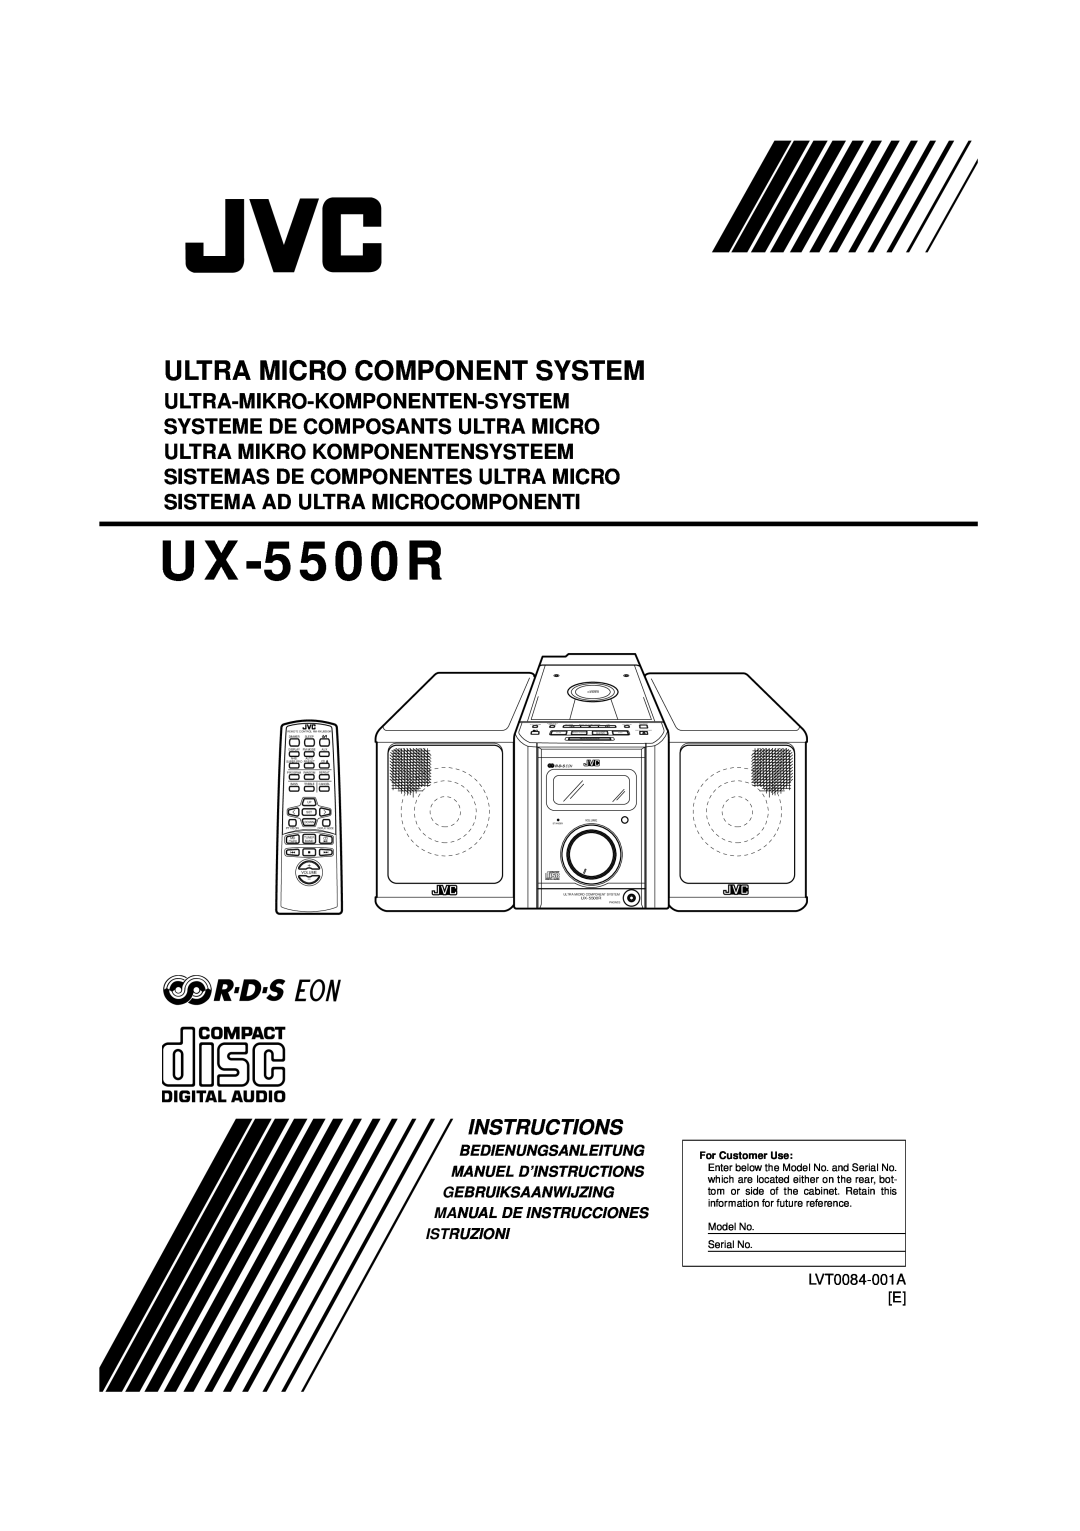 JVC UX-5500R manual Bedienungsanleitung Manuel D’Instructions, Gebruiksaanwijzing Manual De Instrucciones, Istruzioni 